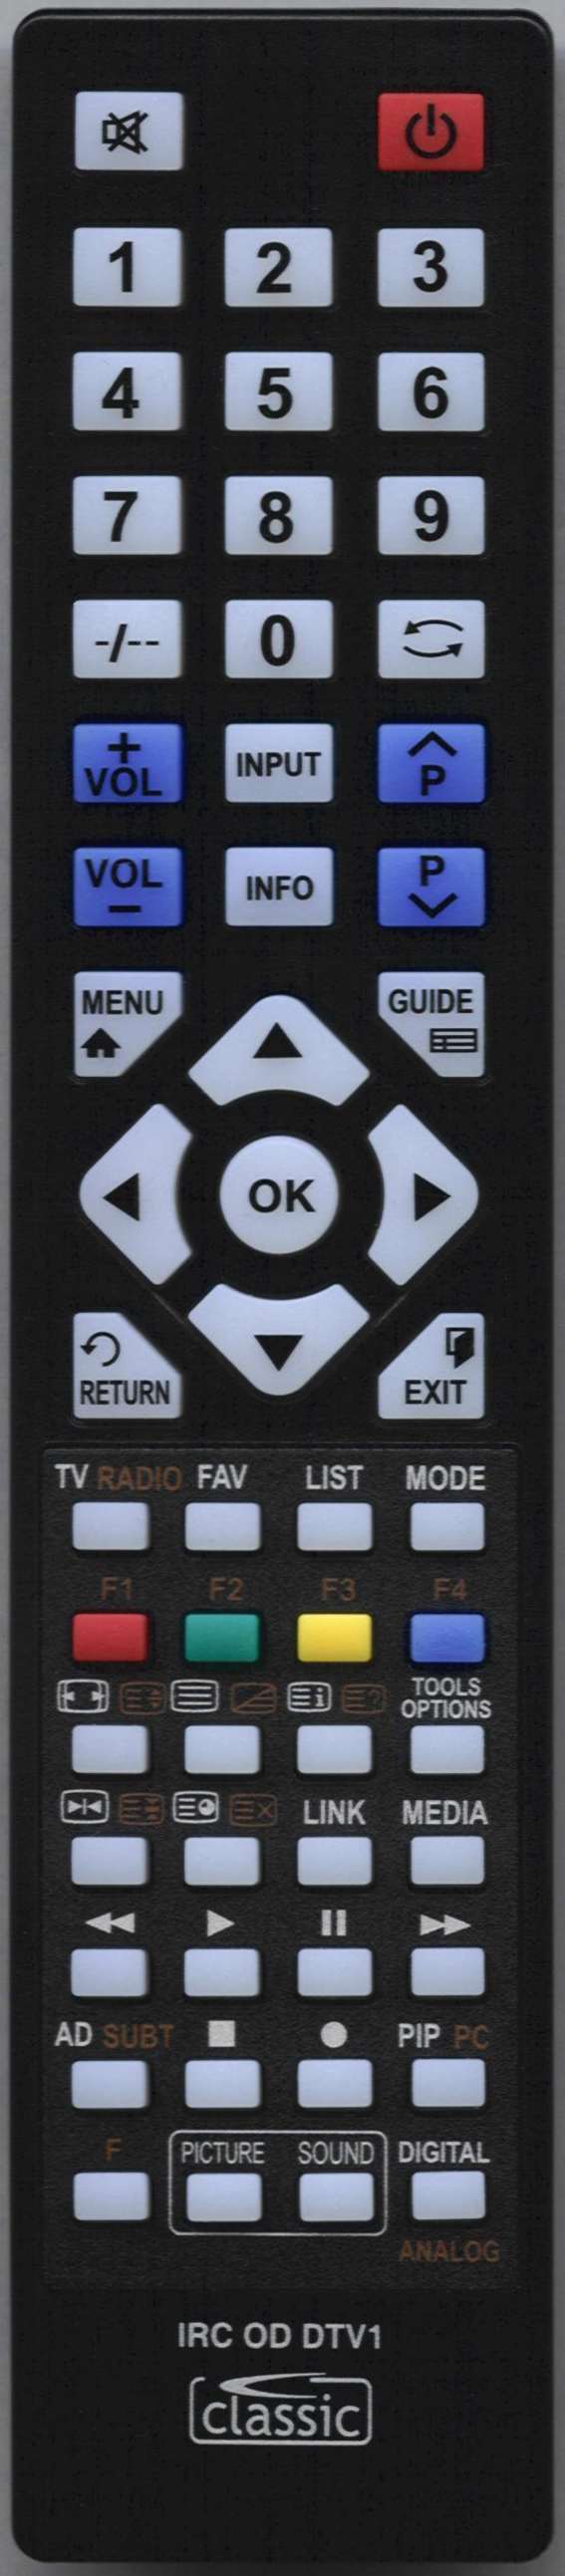 Samsung AA59-00104J Remote Control